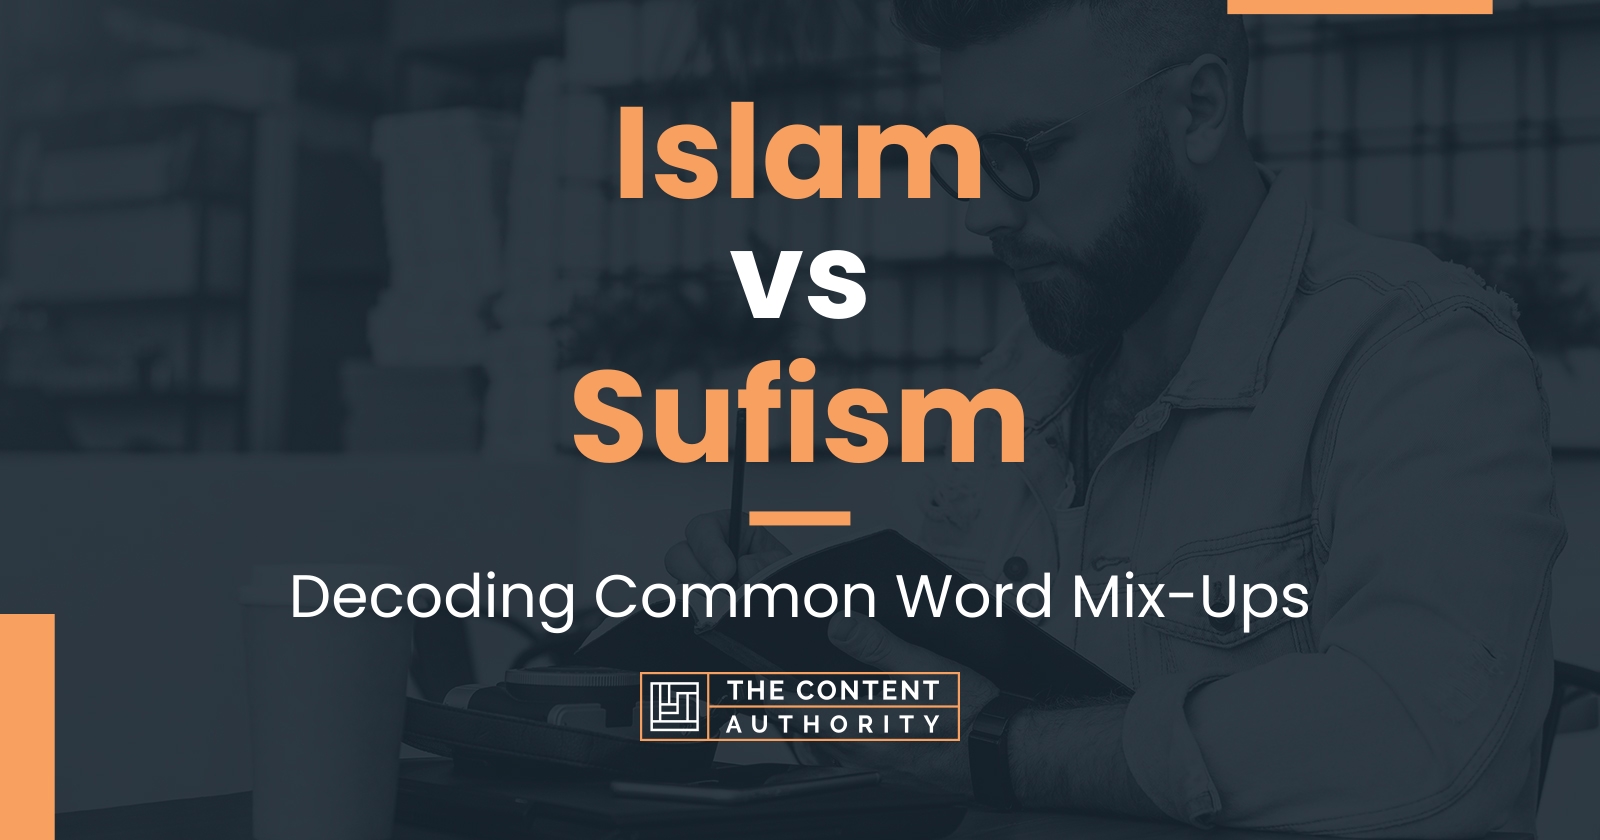 Islam vs Sufism: Decoding Common Word Mix-Ups